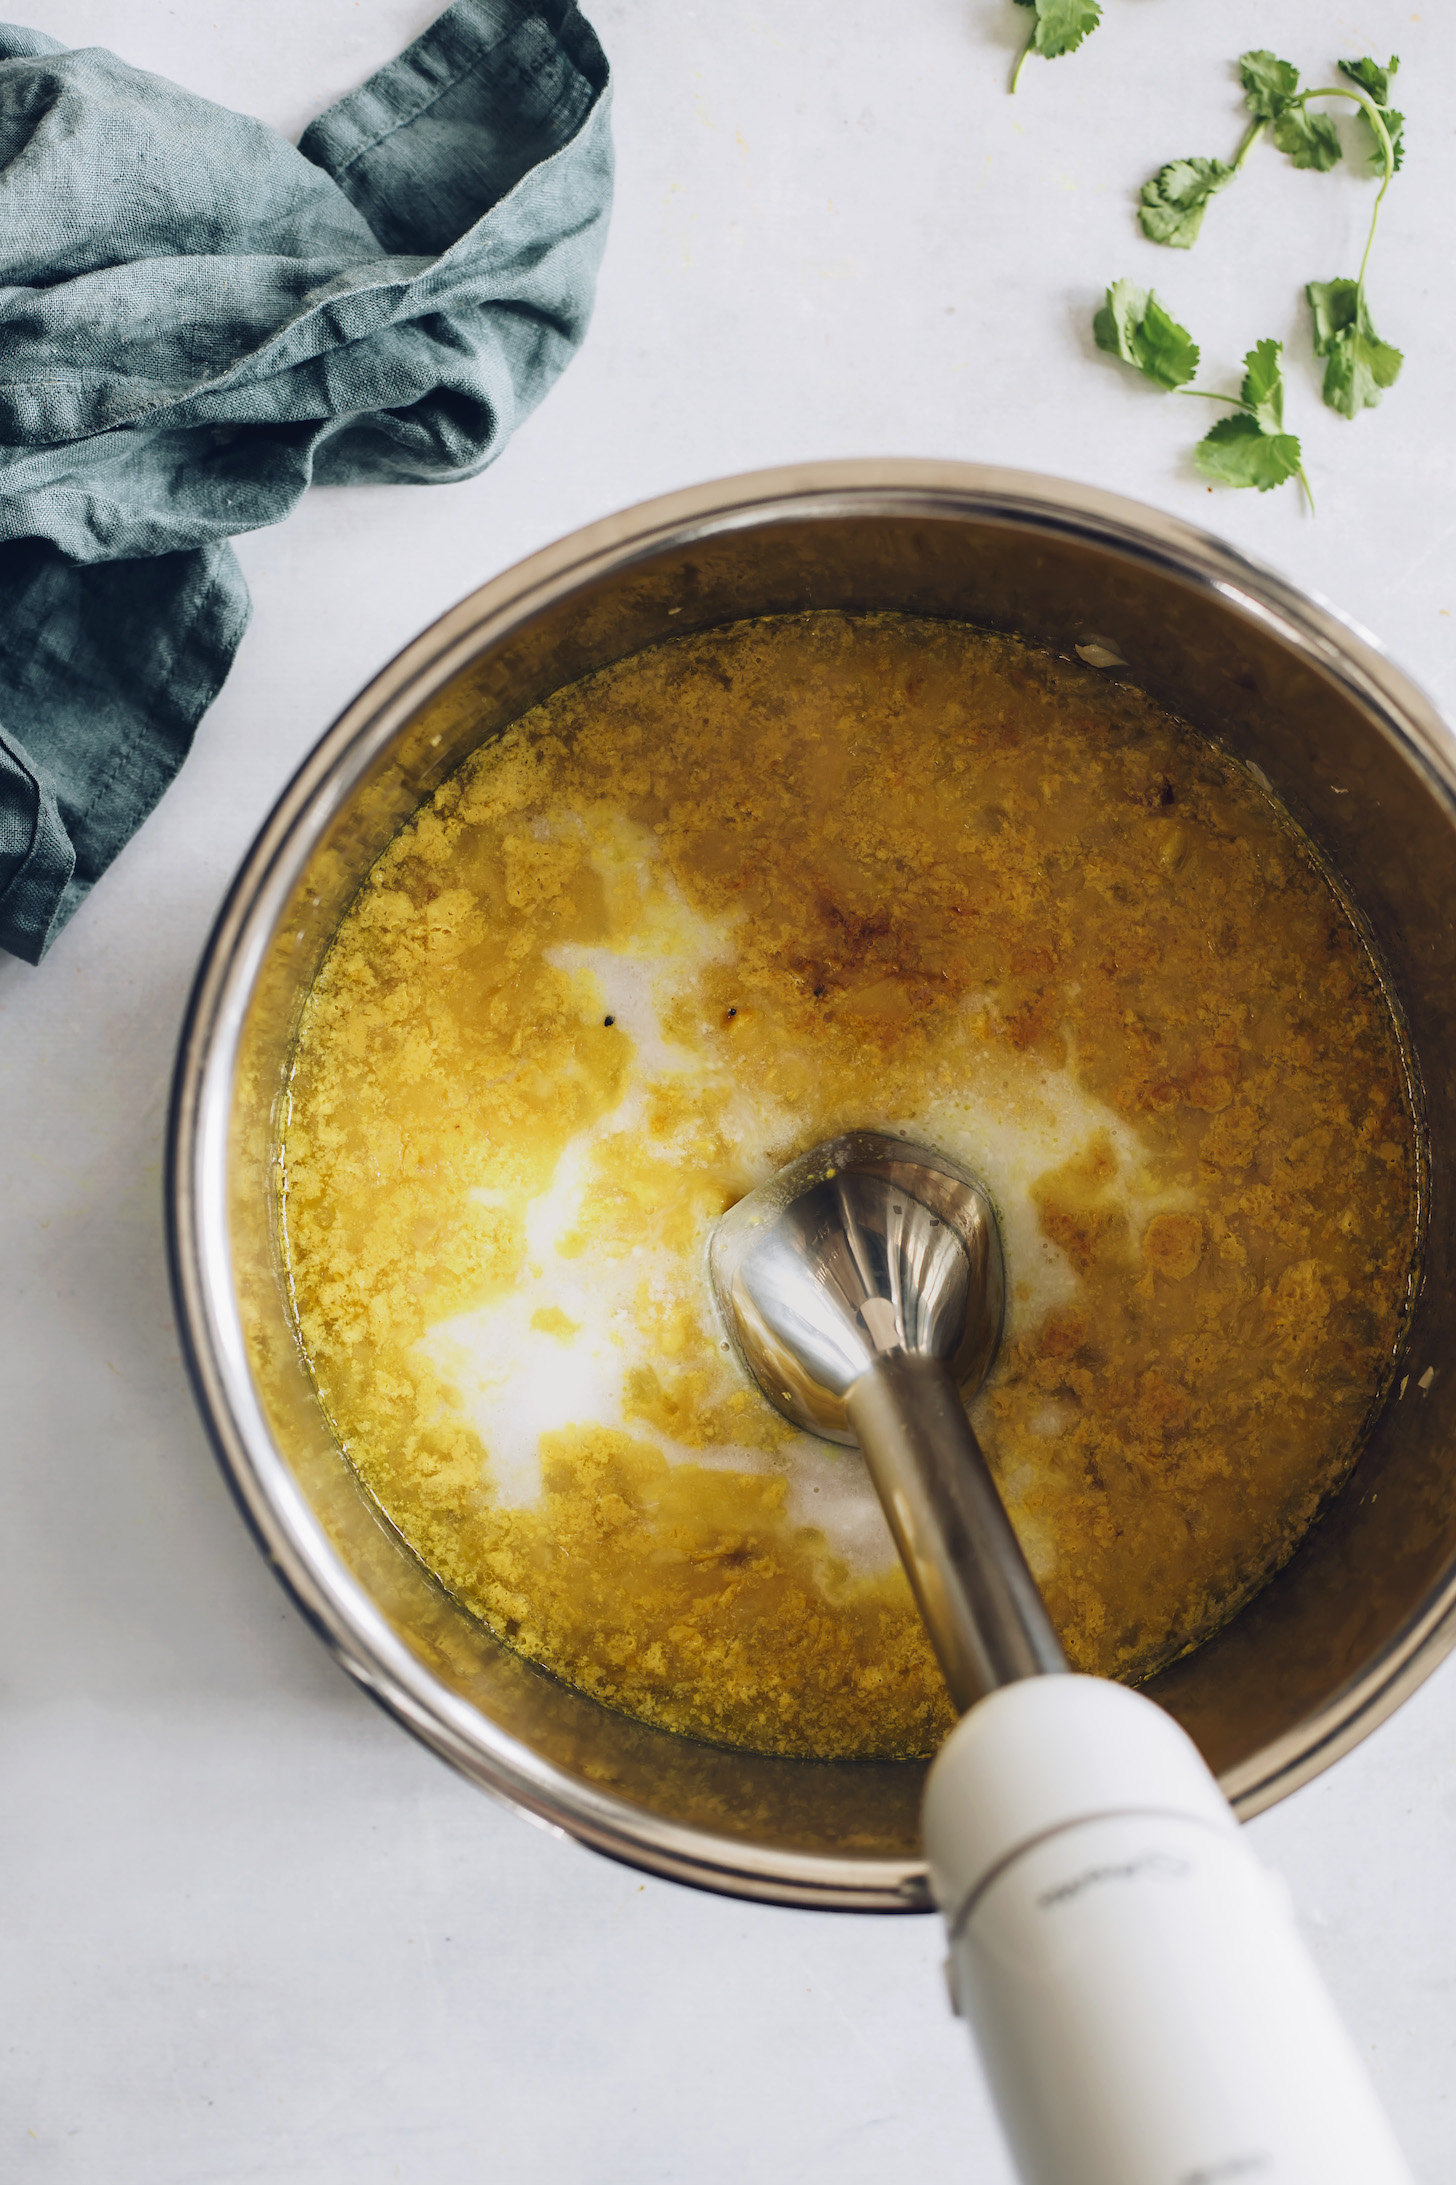 Using an immersion blender to purée split pea soup